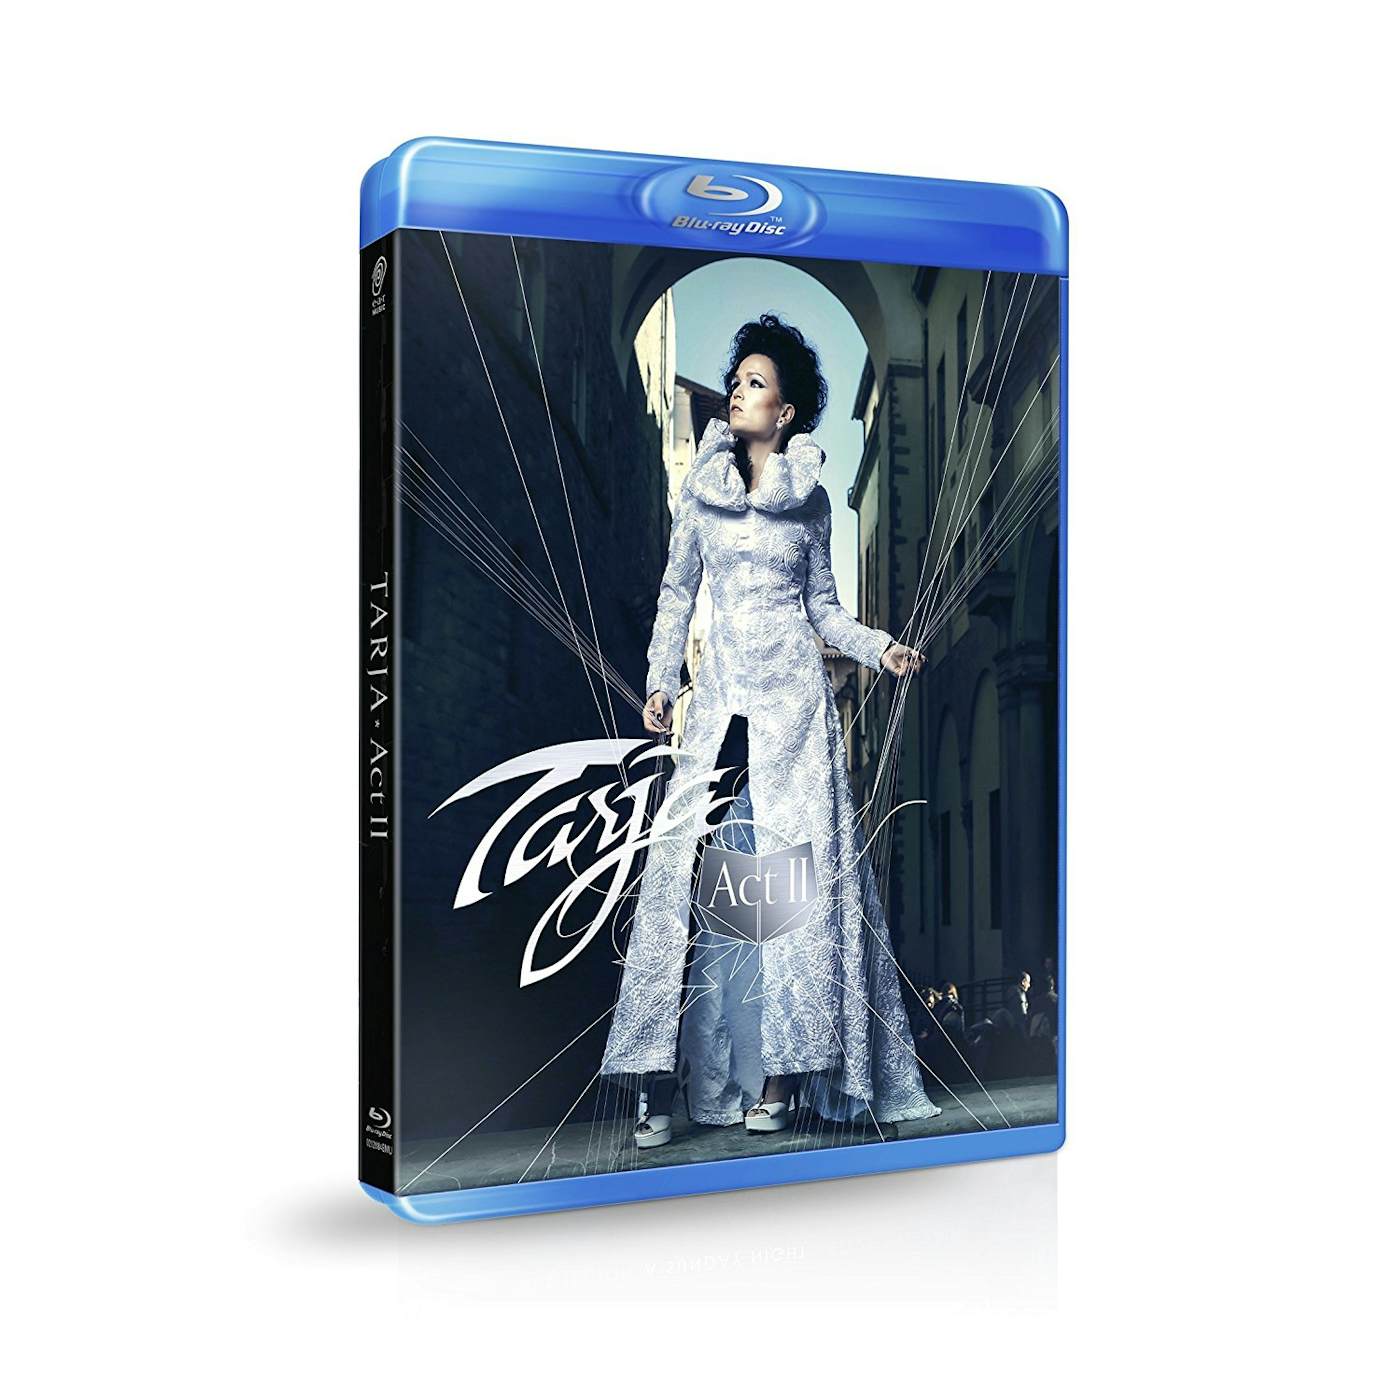 Tarja ACT II Blu-ray